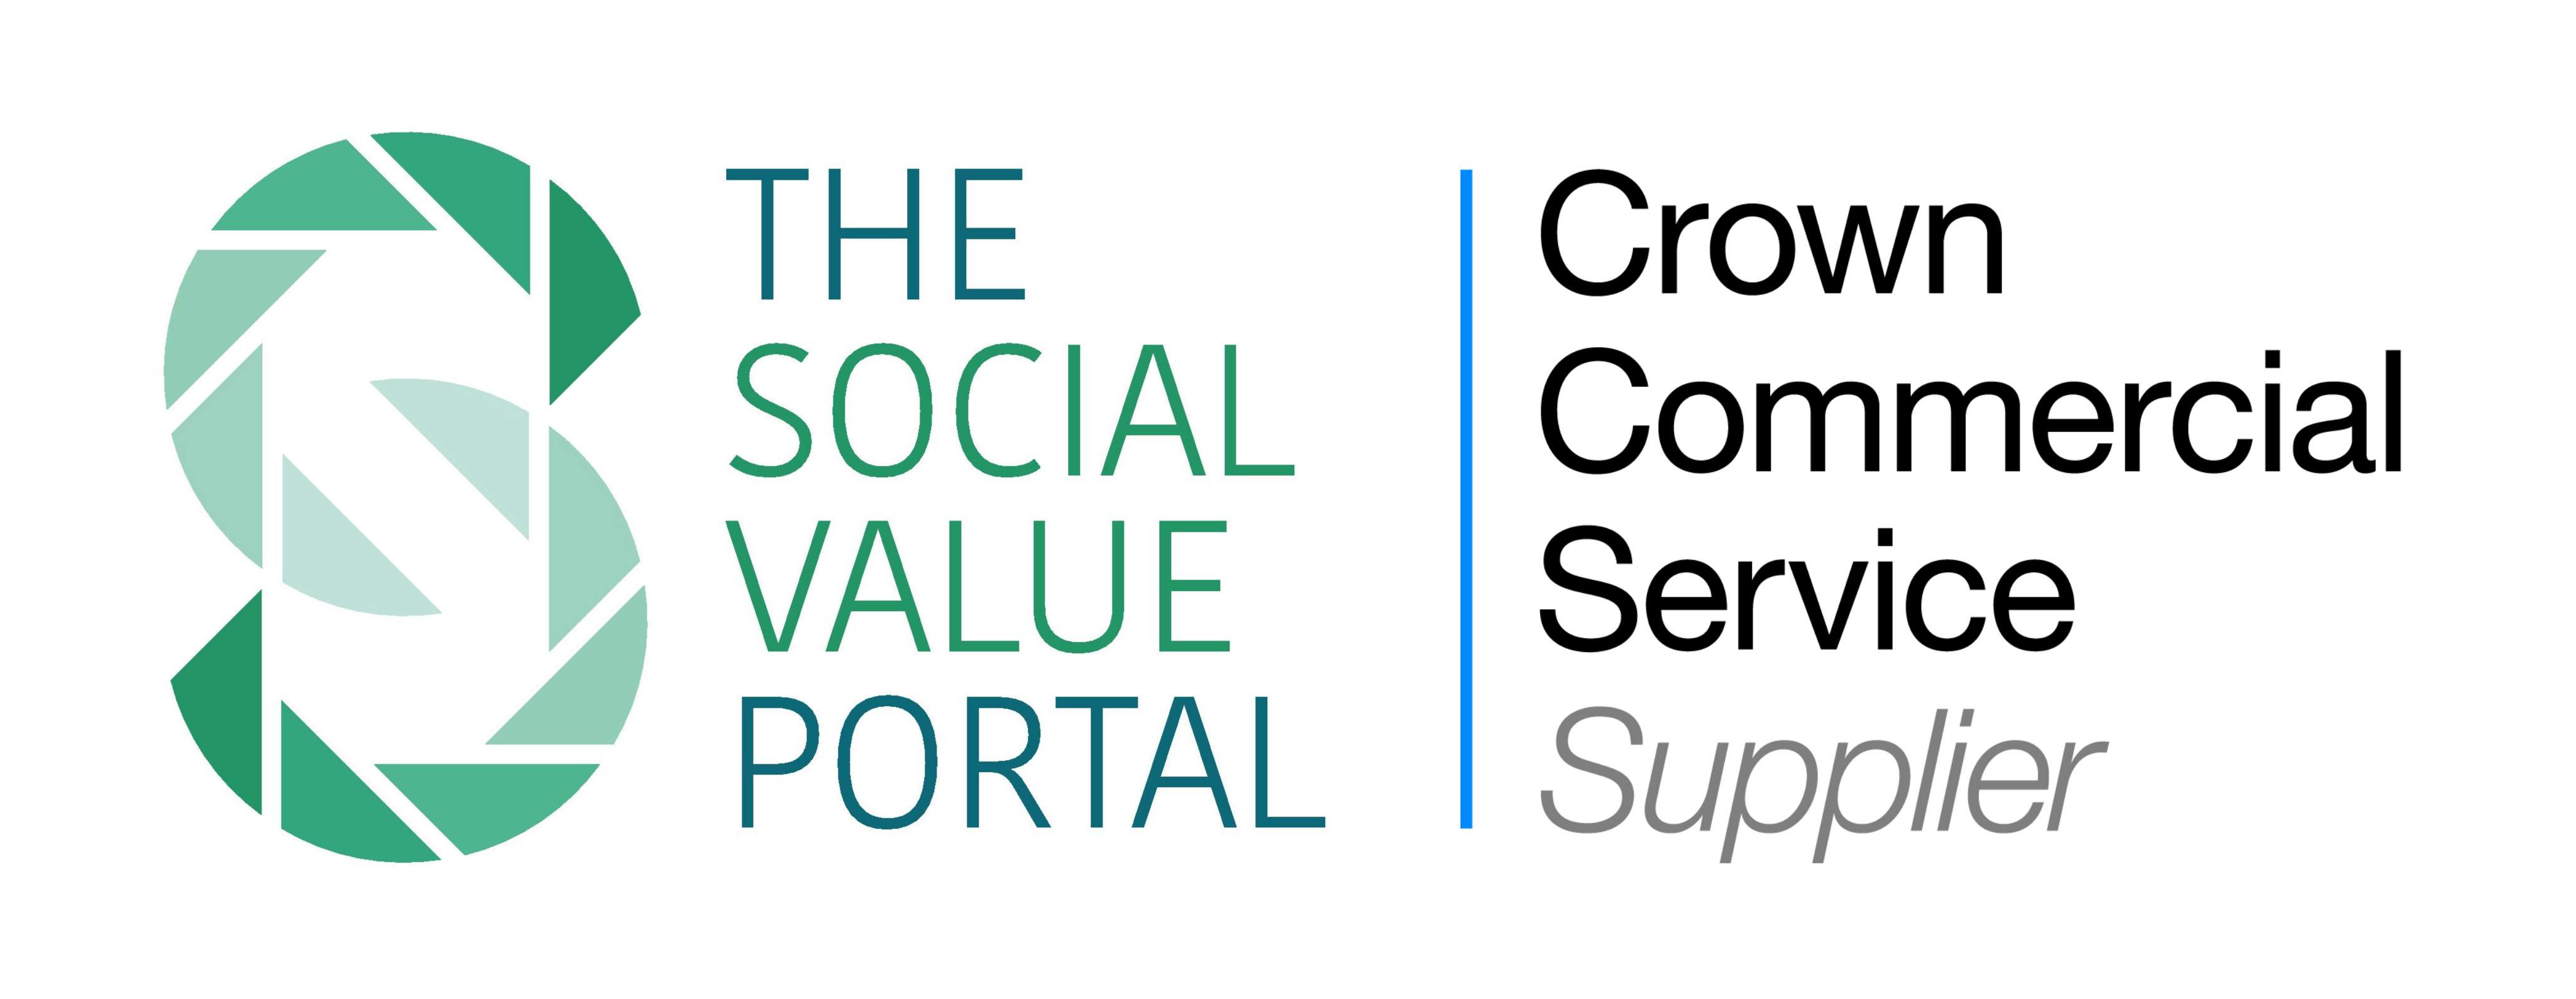 Portal Logo - Home Value Portal